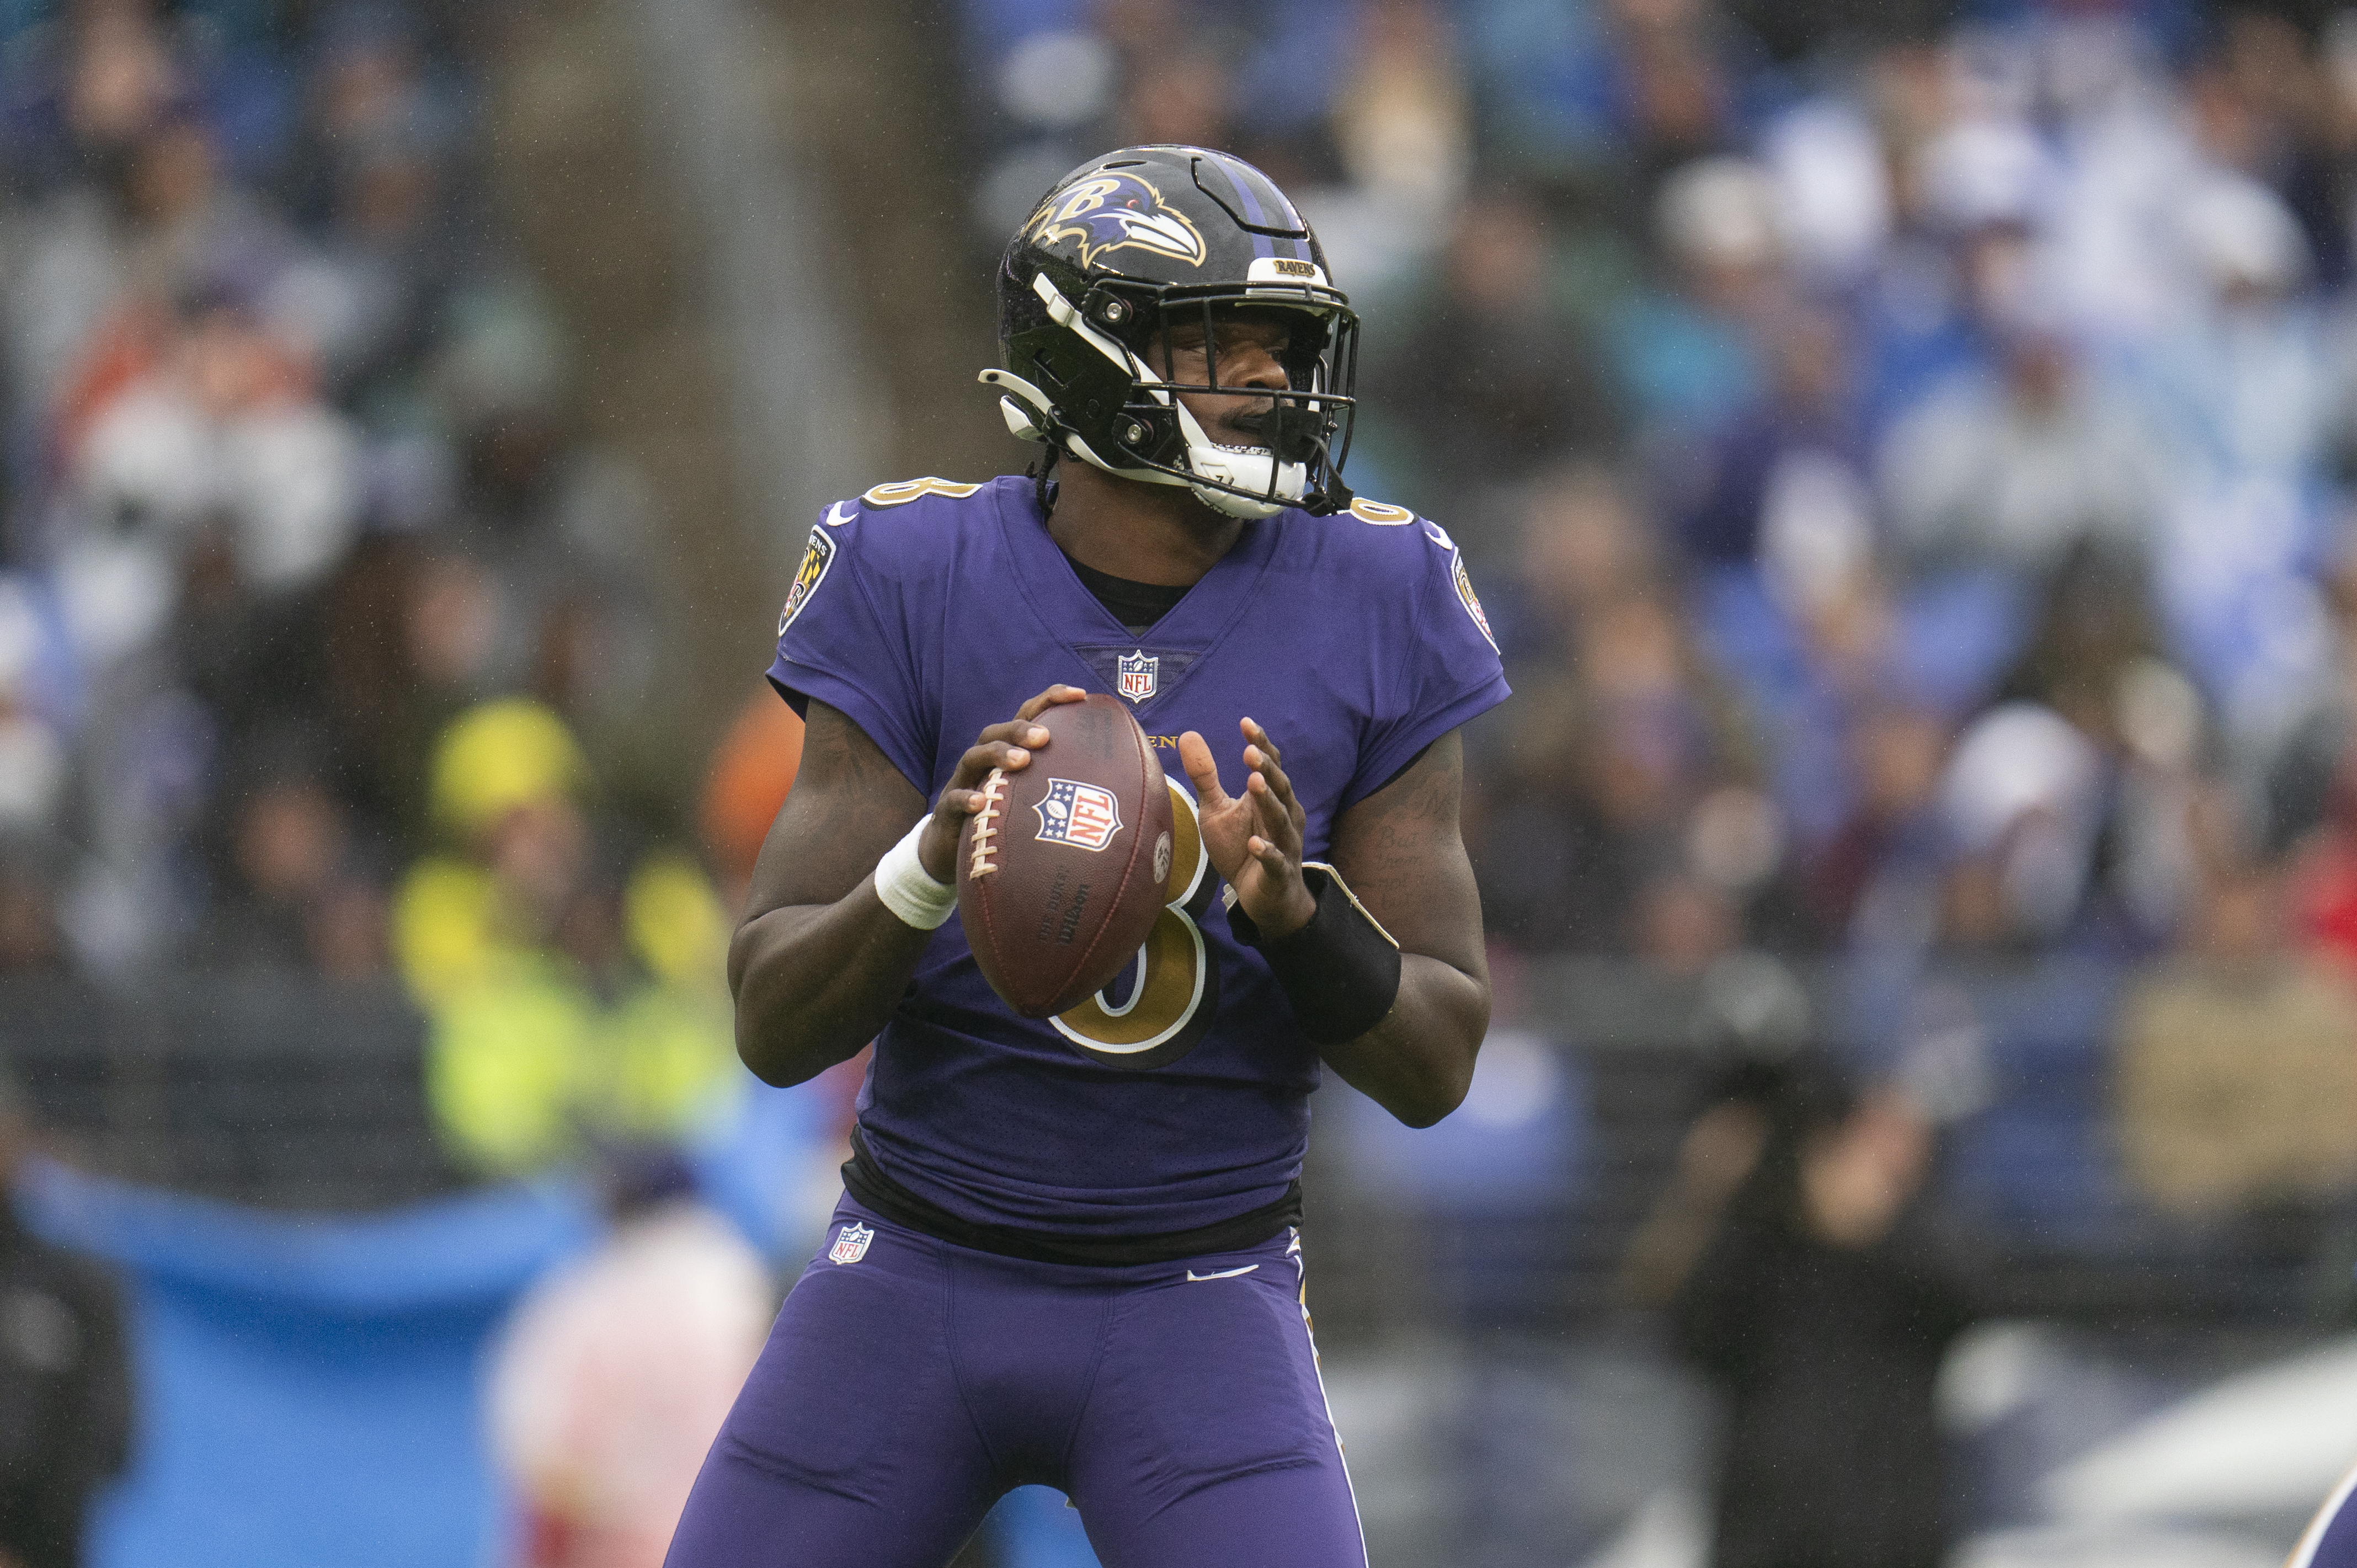 Bengals vs. Ravens prediction, betting odds for NFL Week 5 